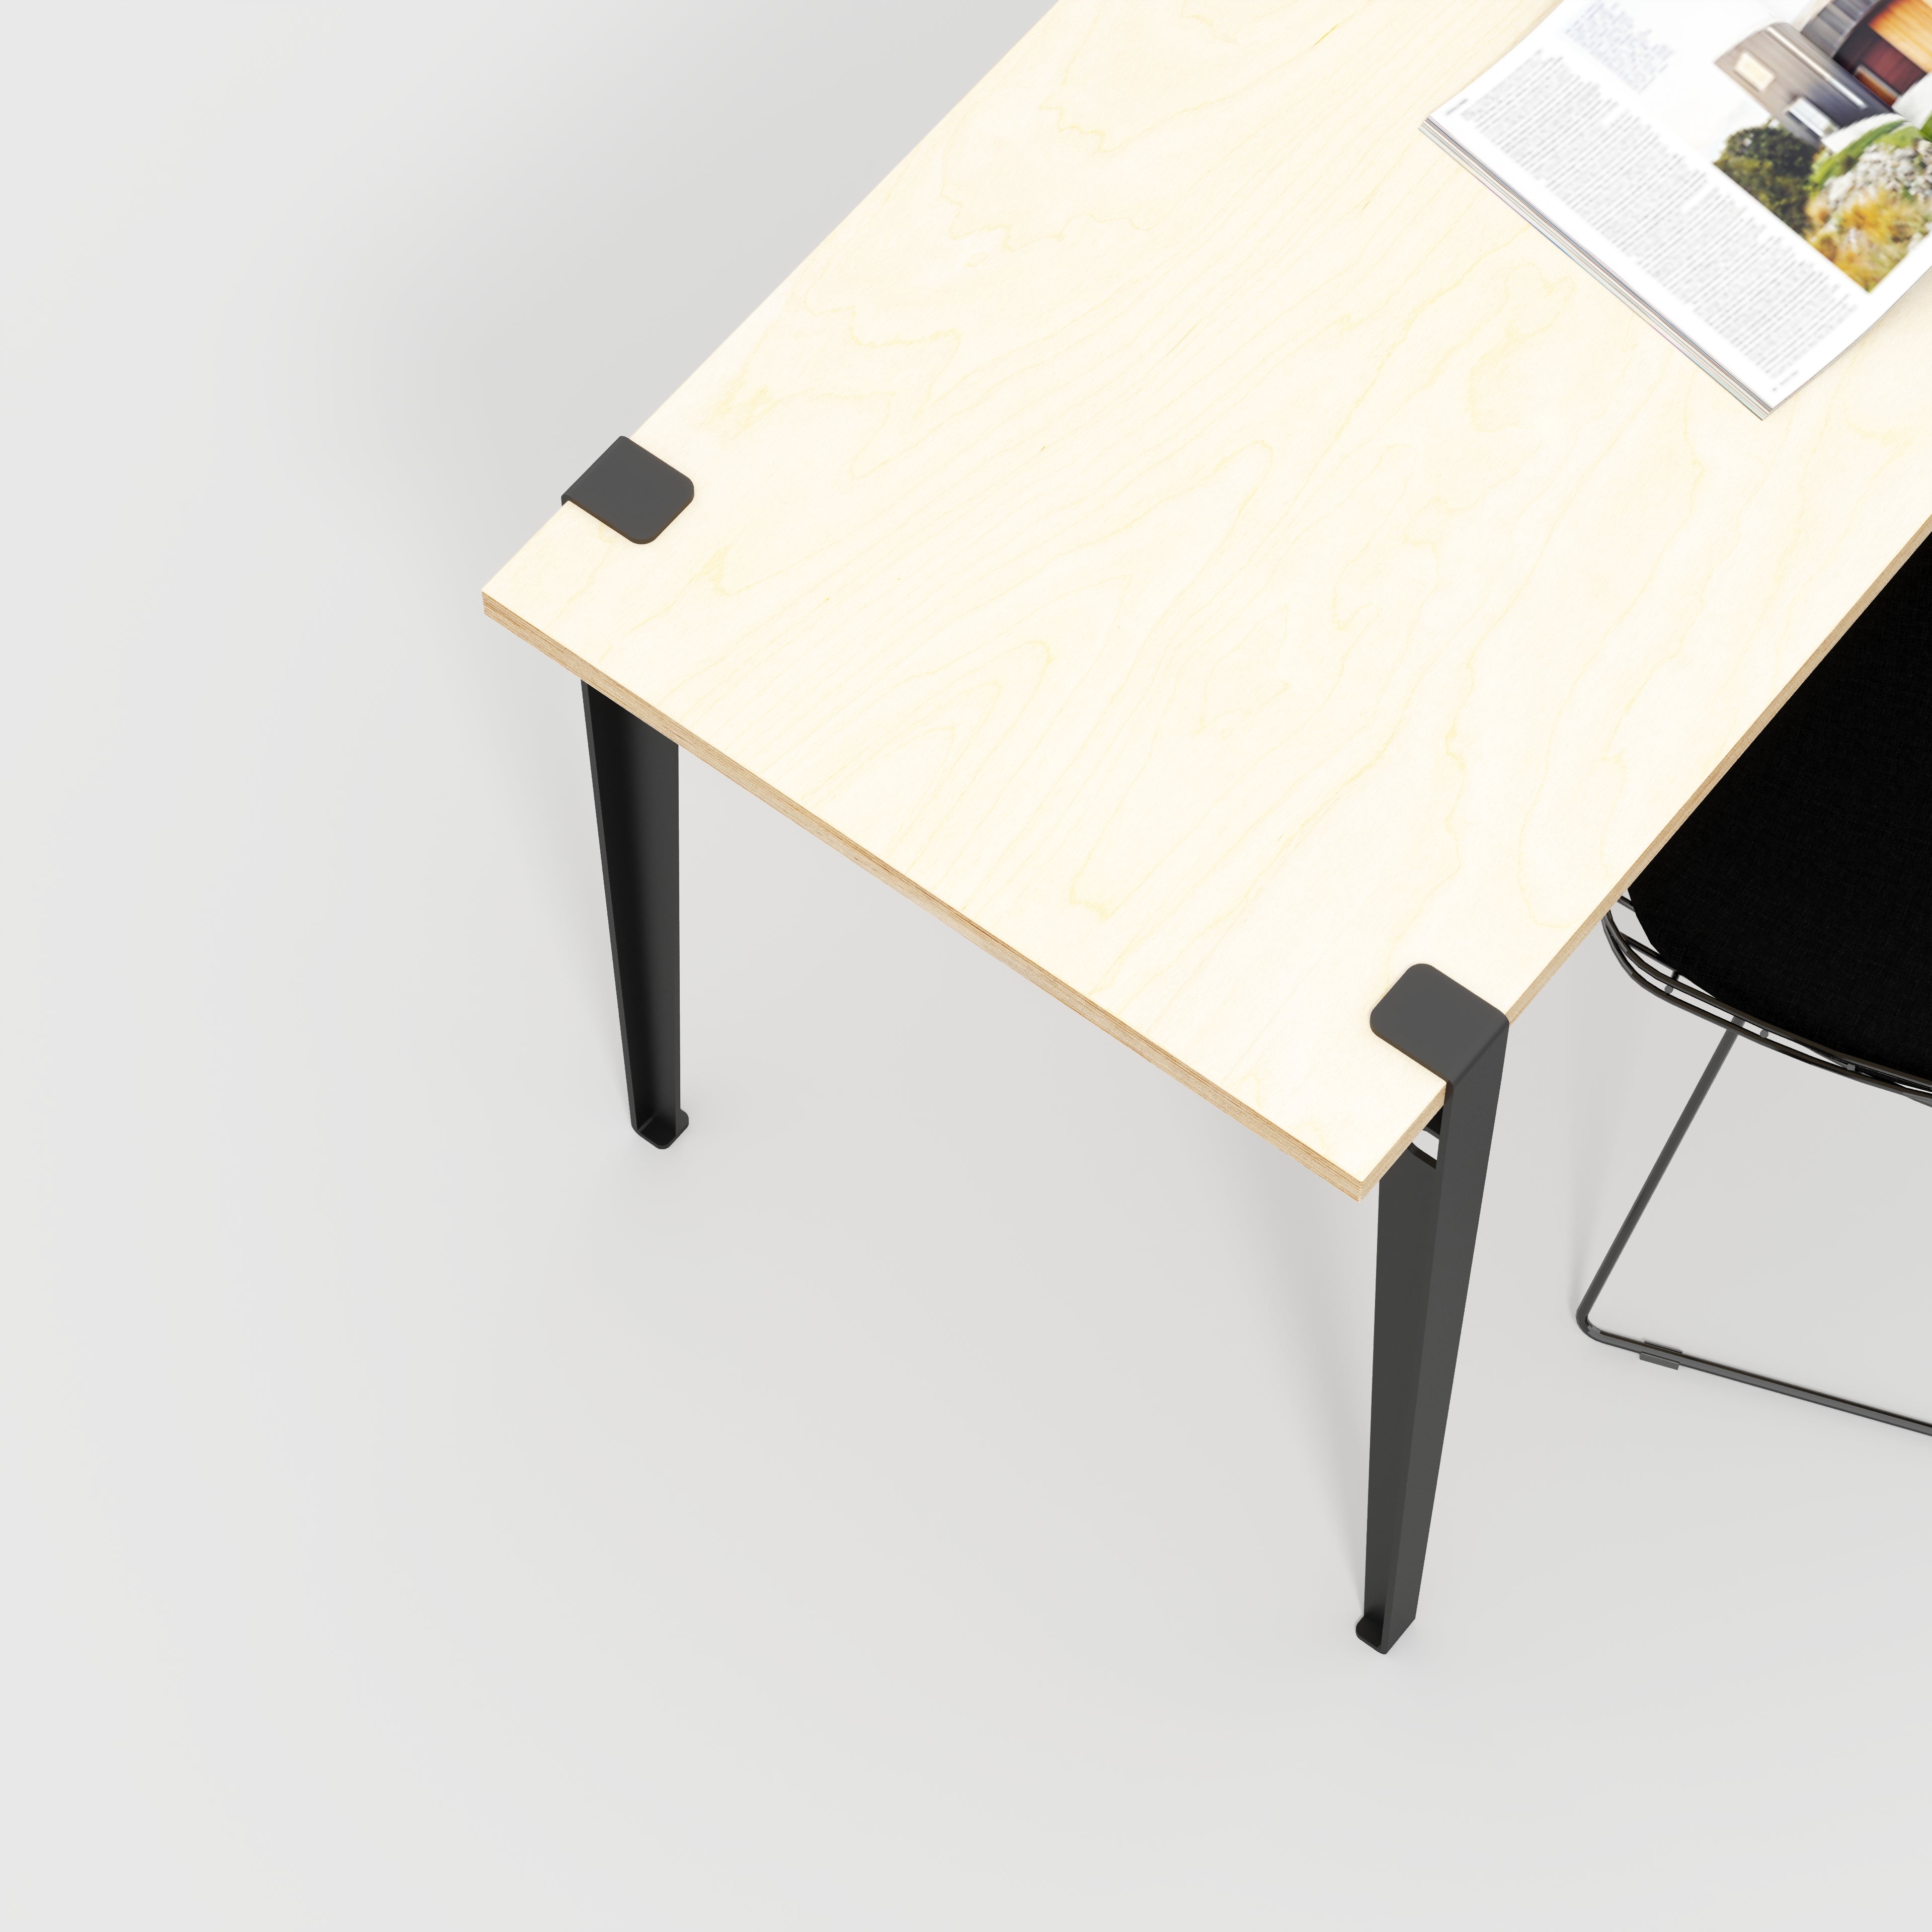 Custom Plywood Desk with Tiptoe Legs